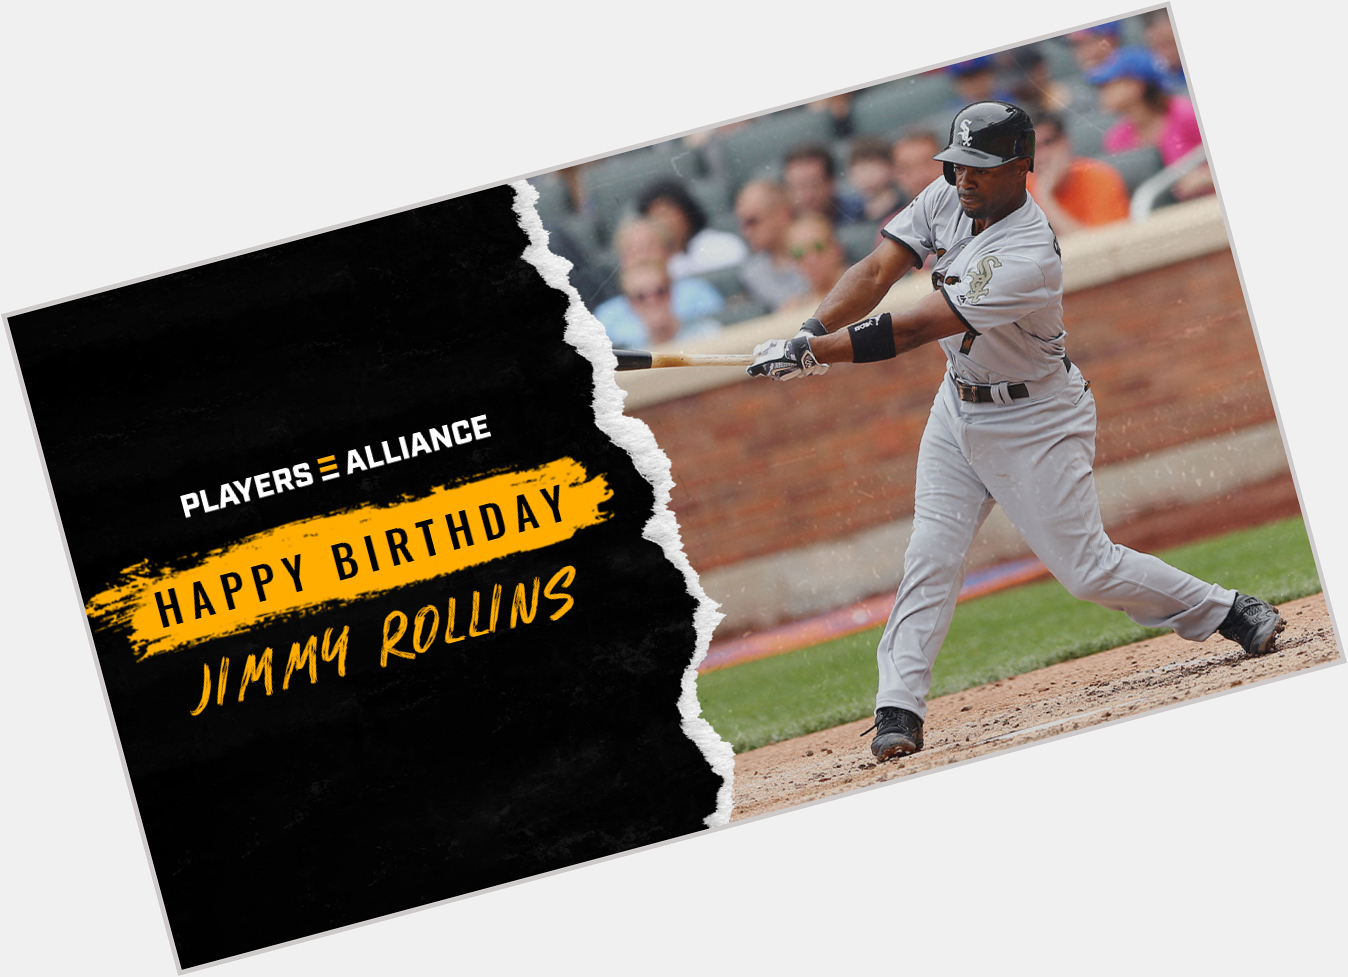 Wishing a very happy birthday to Jimmy Rollins 